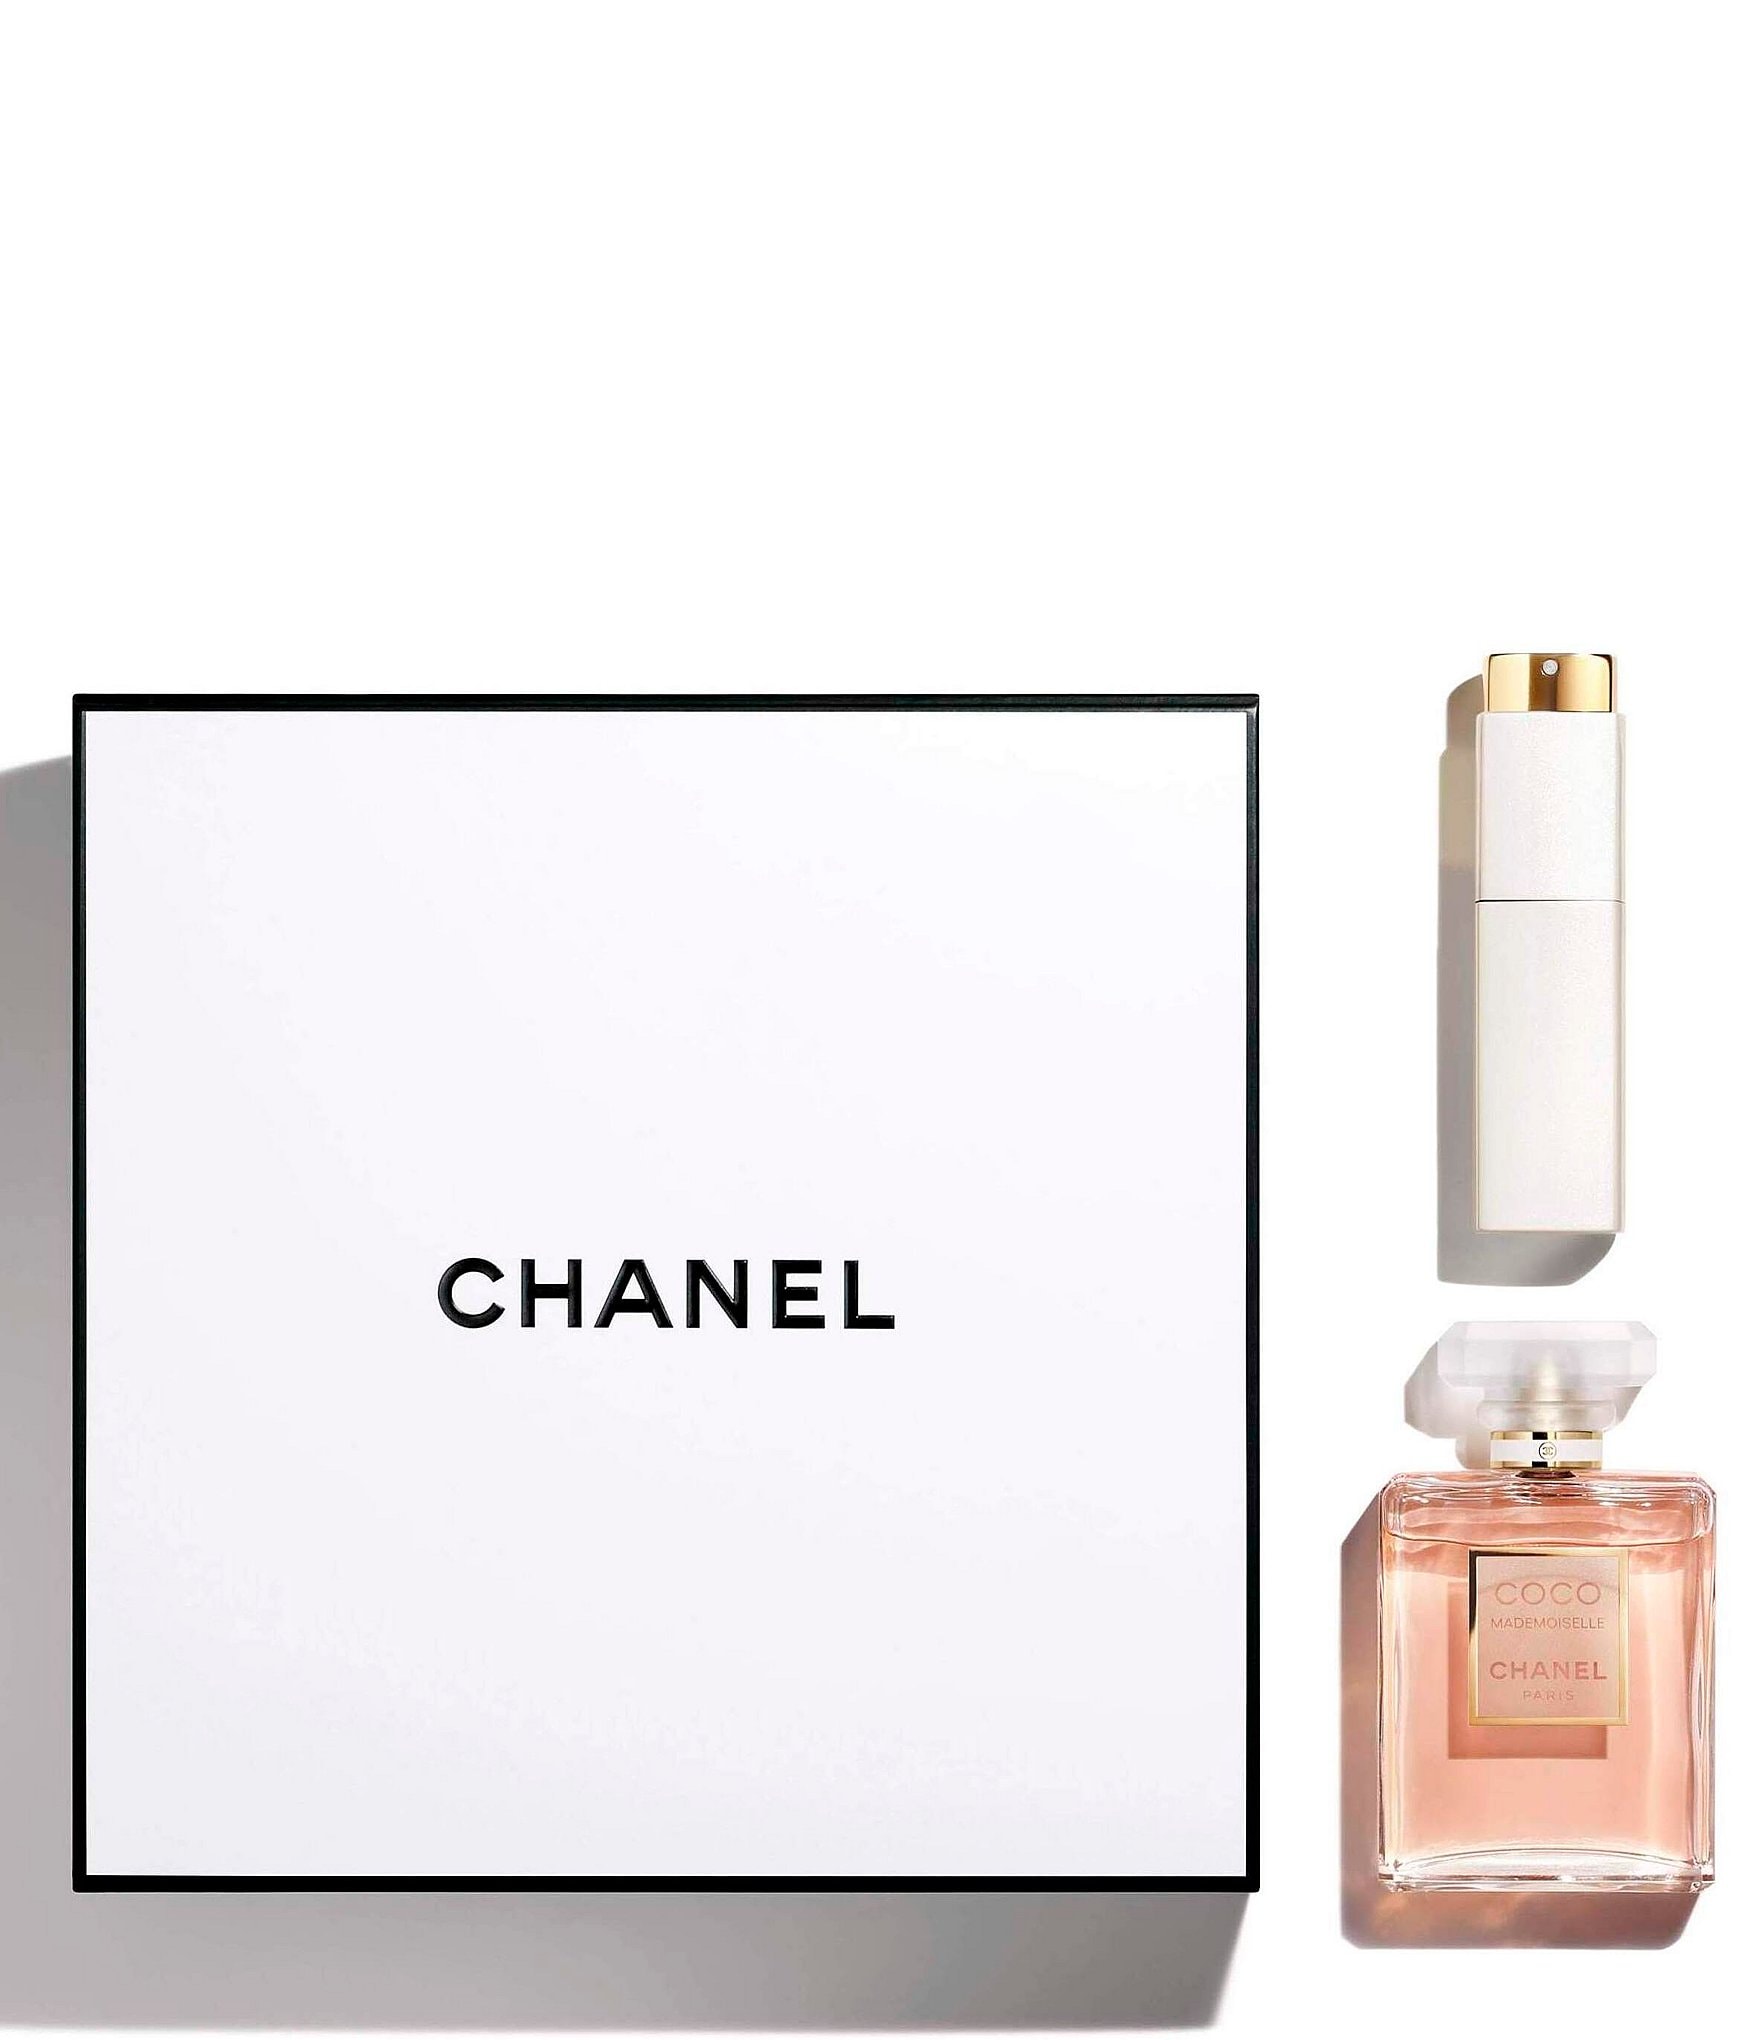 chanel perfume black friday deals